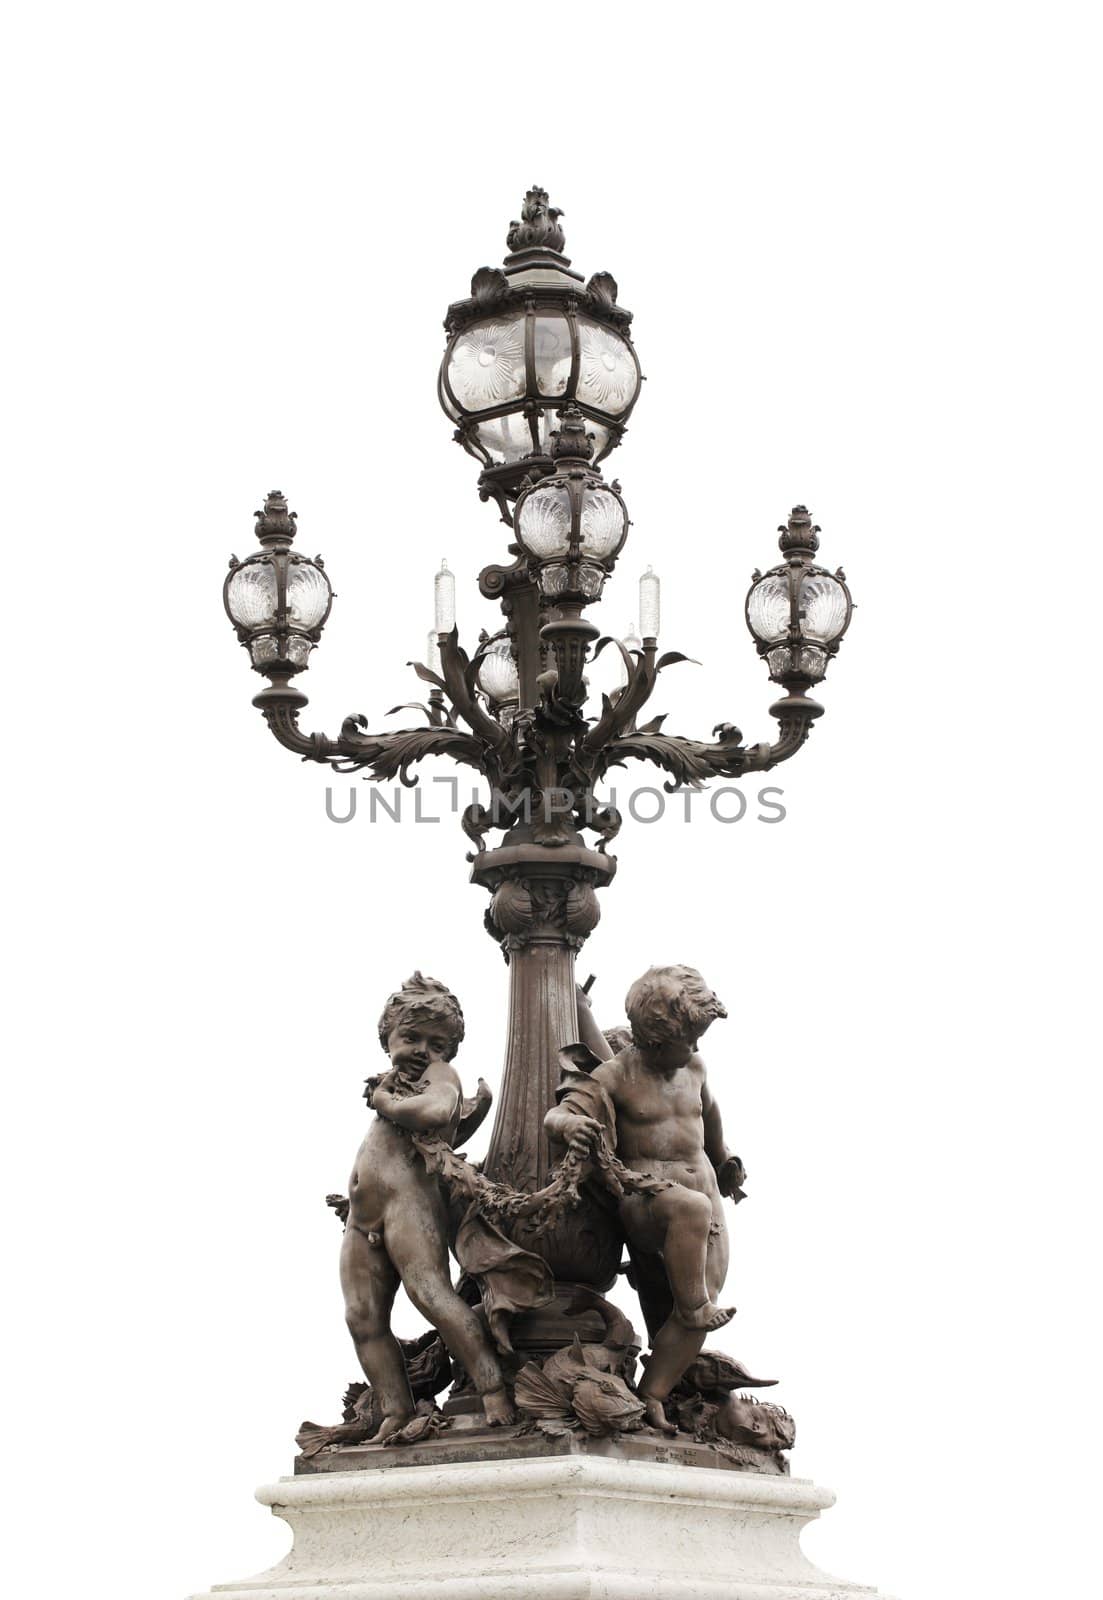 Ornate lamp post of Pont Alexandre III bridge in Paris, France.